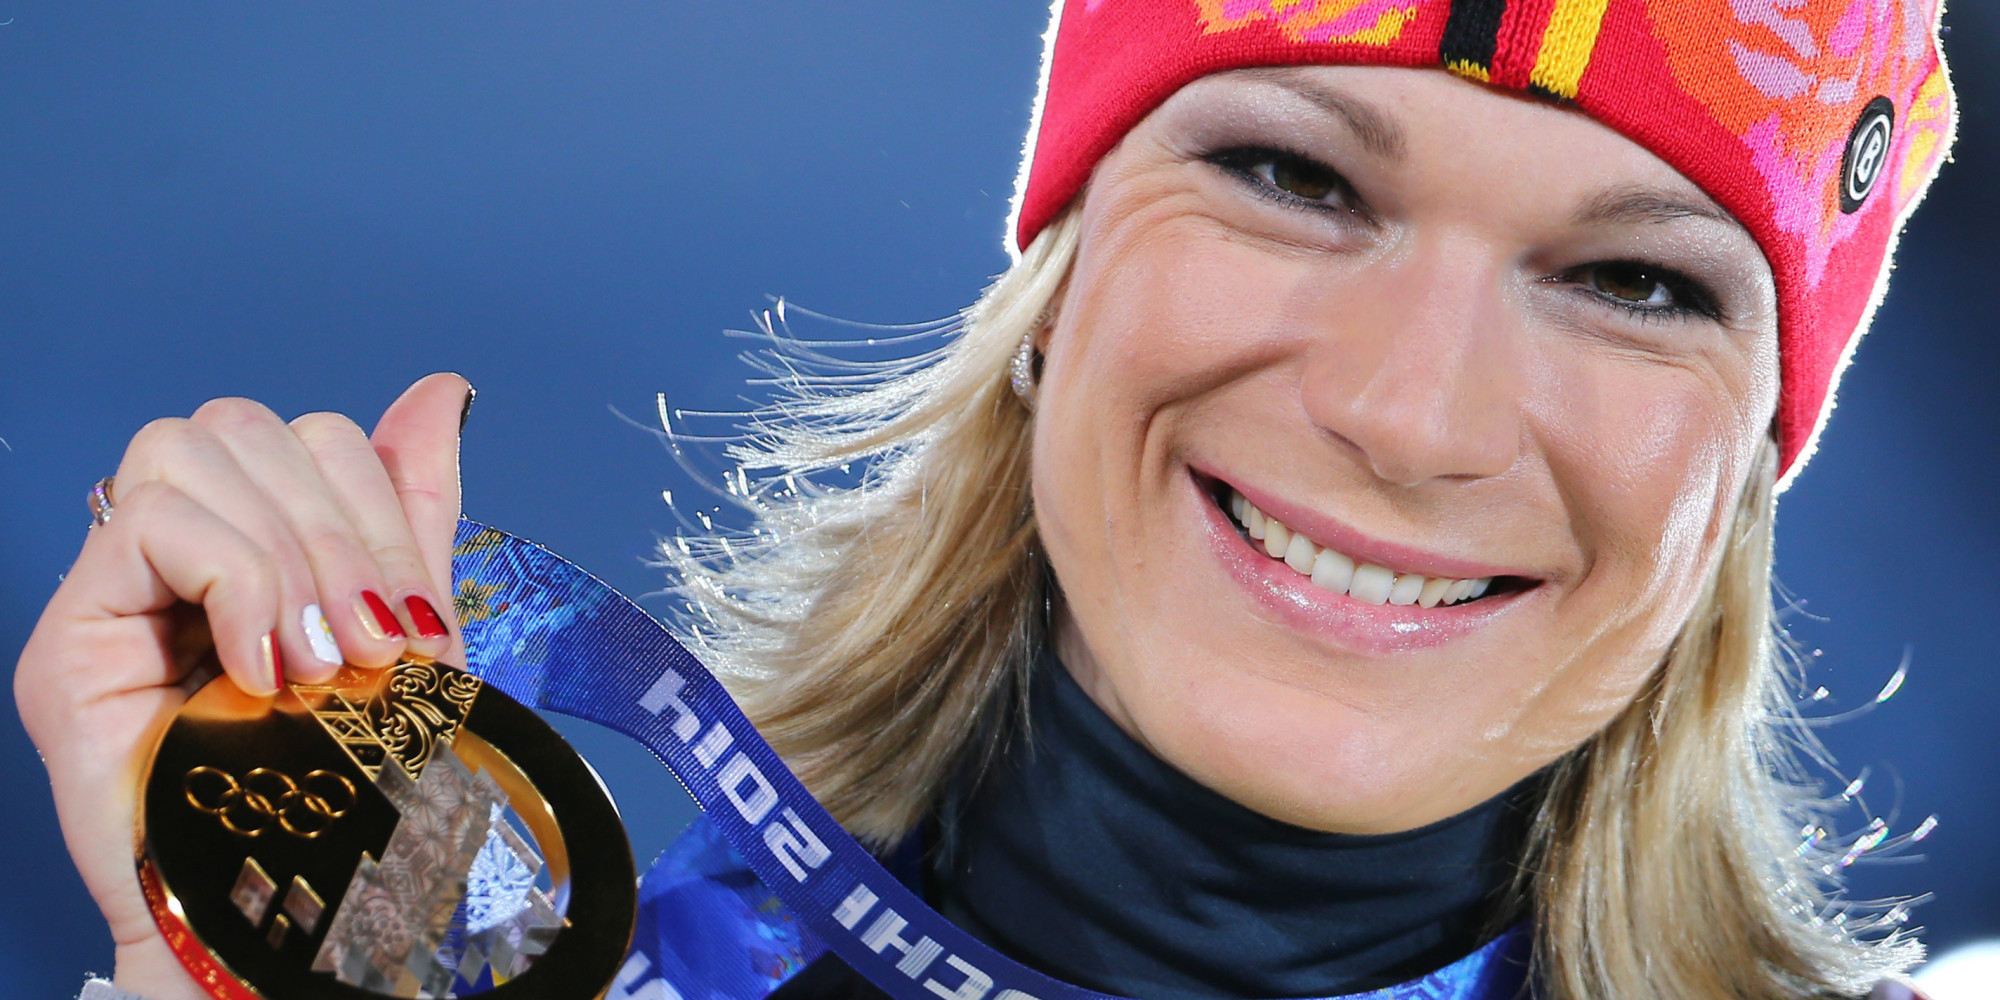 ... Riesch Hefley German skier won gold and bronze medals in Sochi in 2014 - ... - _Maria_Riesch_Hefley_Russian_skier_won_gold_and_bronze_medals_in_Sochi_in_2014_067941_